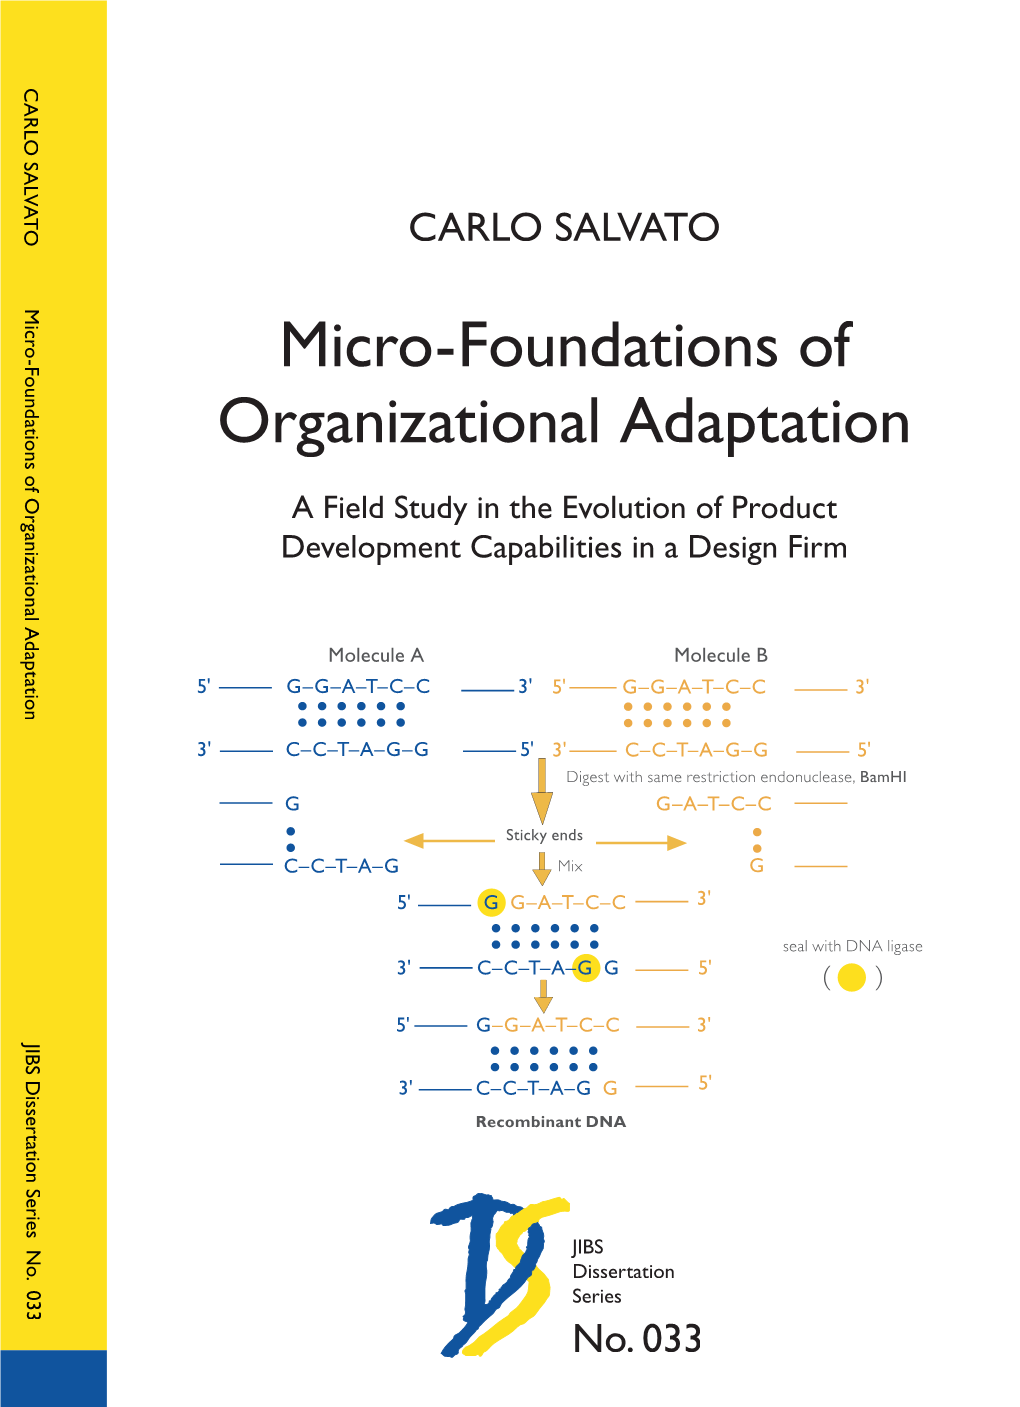 Micro-Foundations of Organizational Adaptation